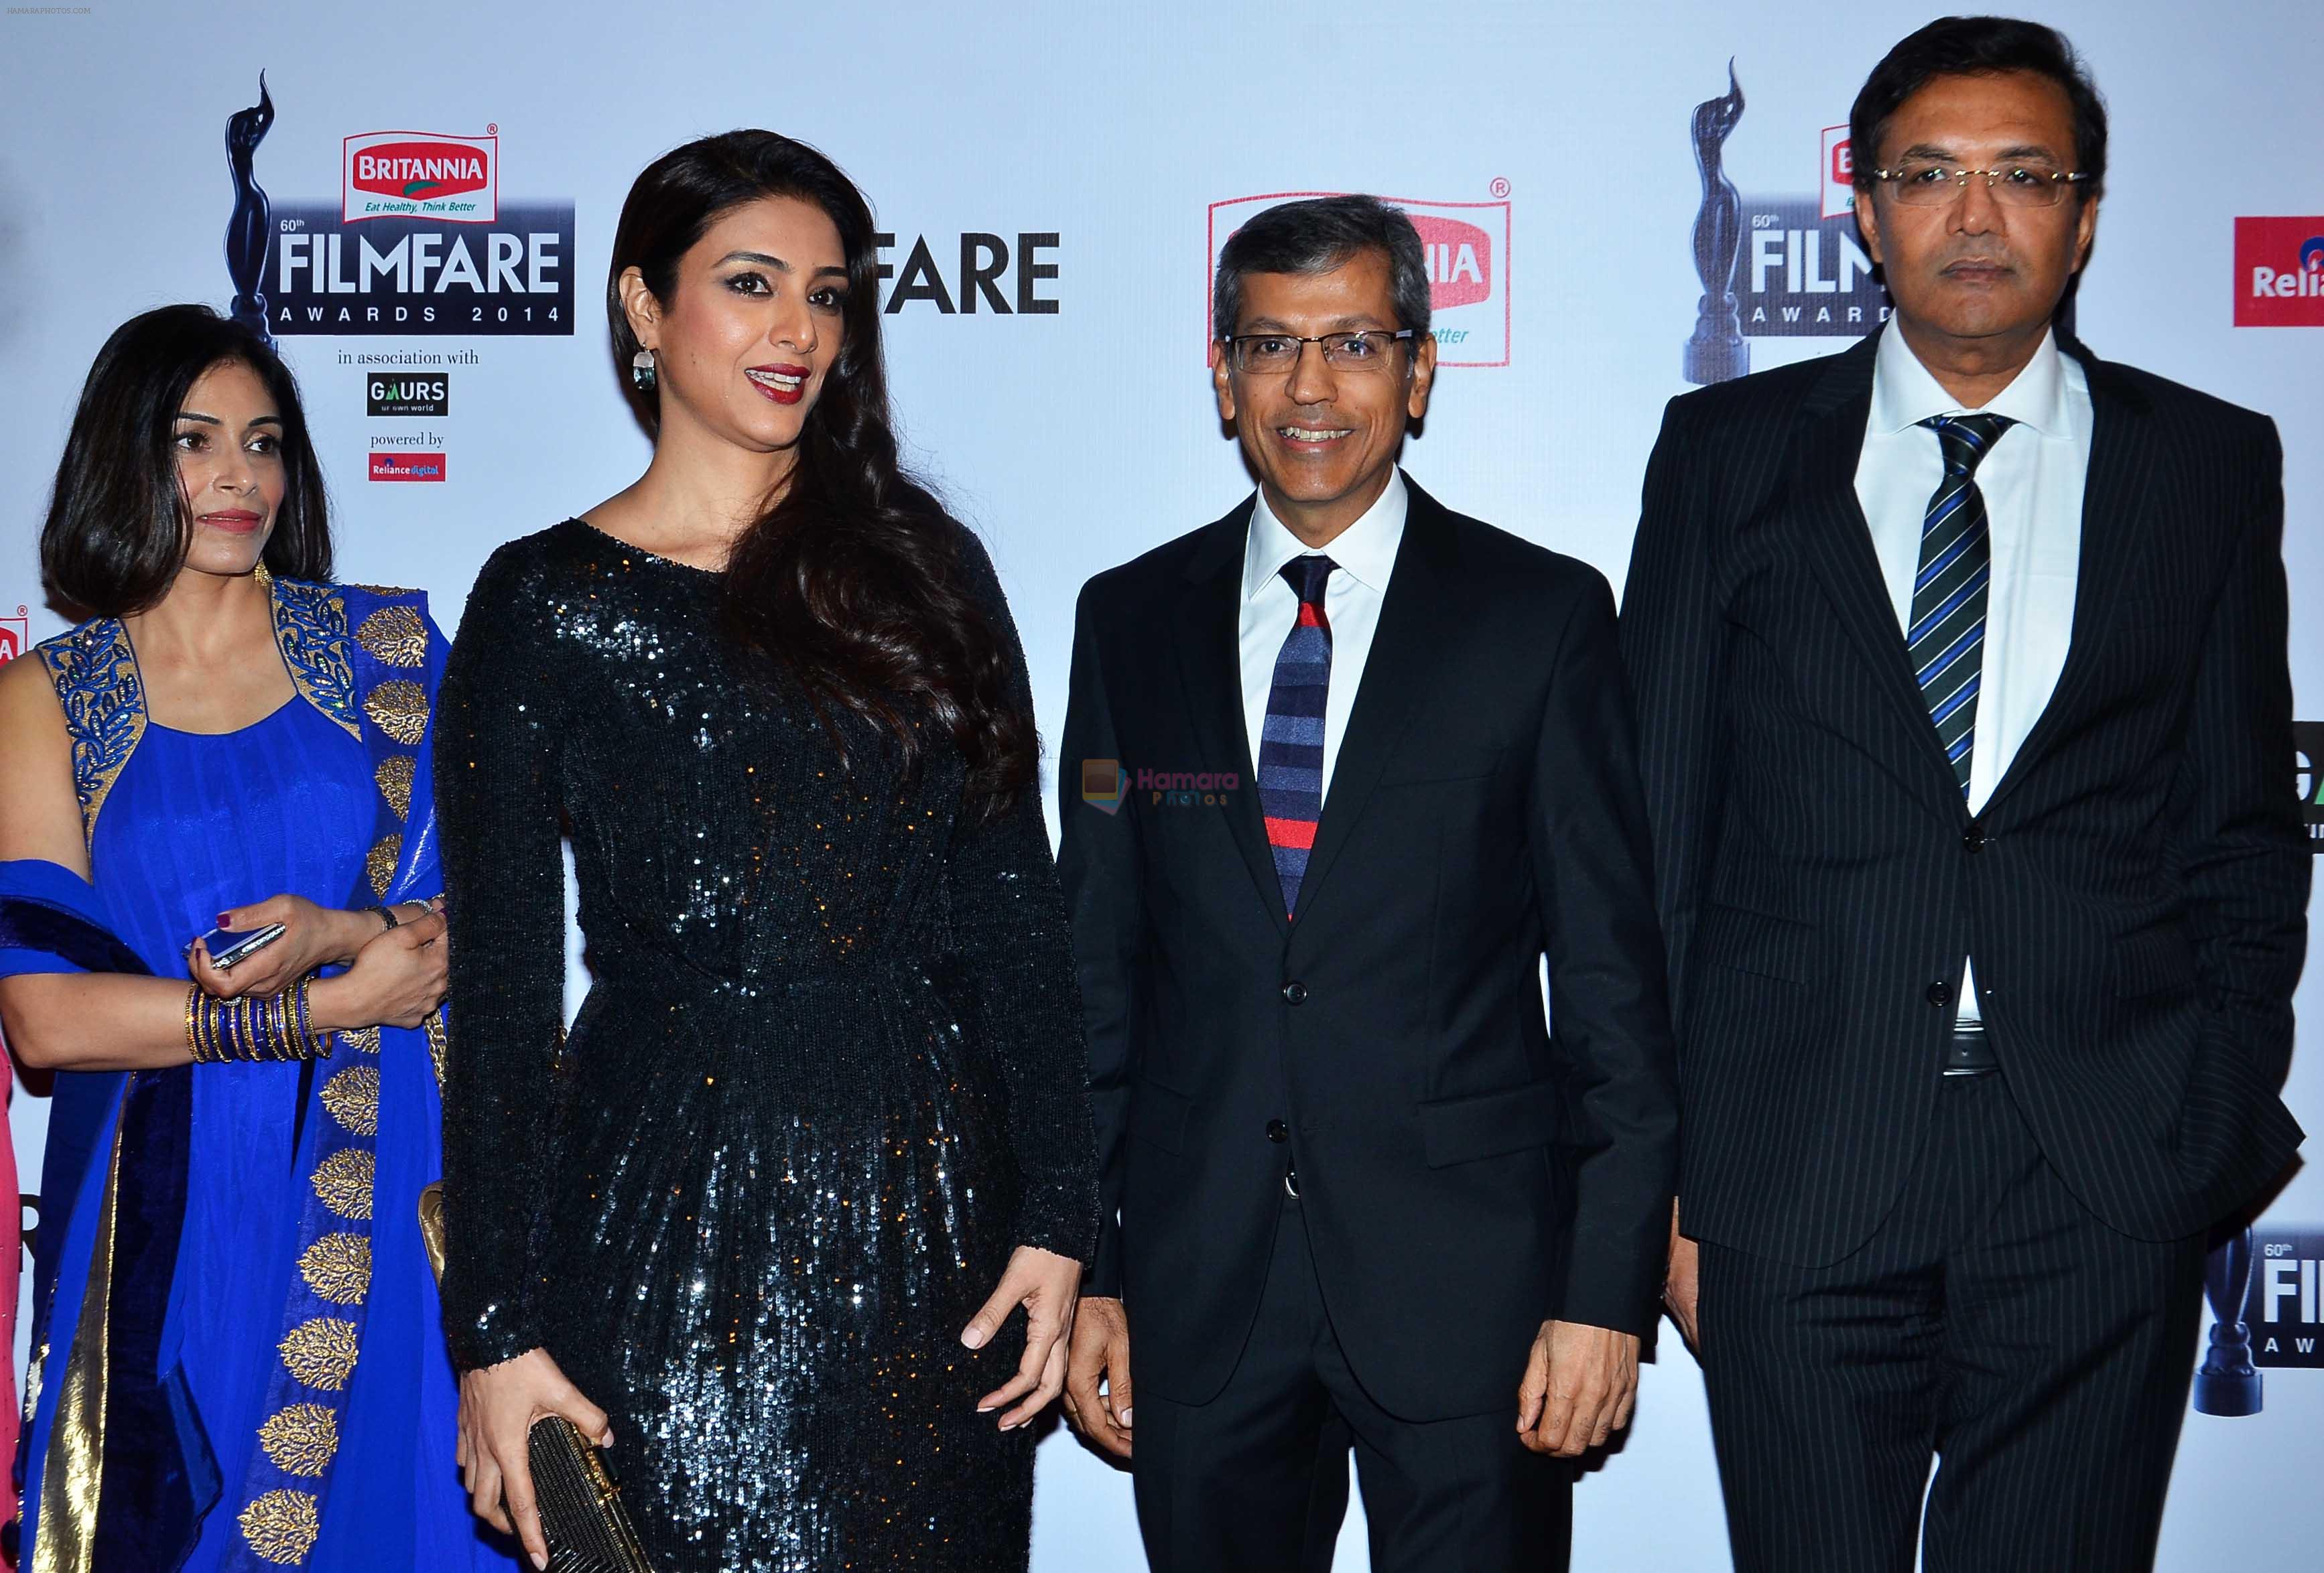 Tabu with Mr. Tarun Rai & Varun Berry graces the red carpet at the 60th Britannia Filmfare Awards